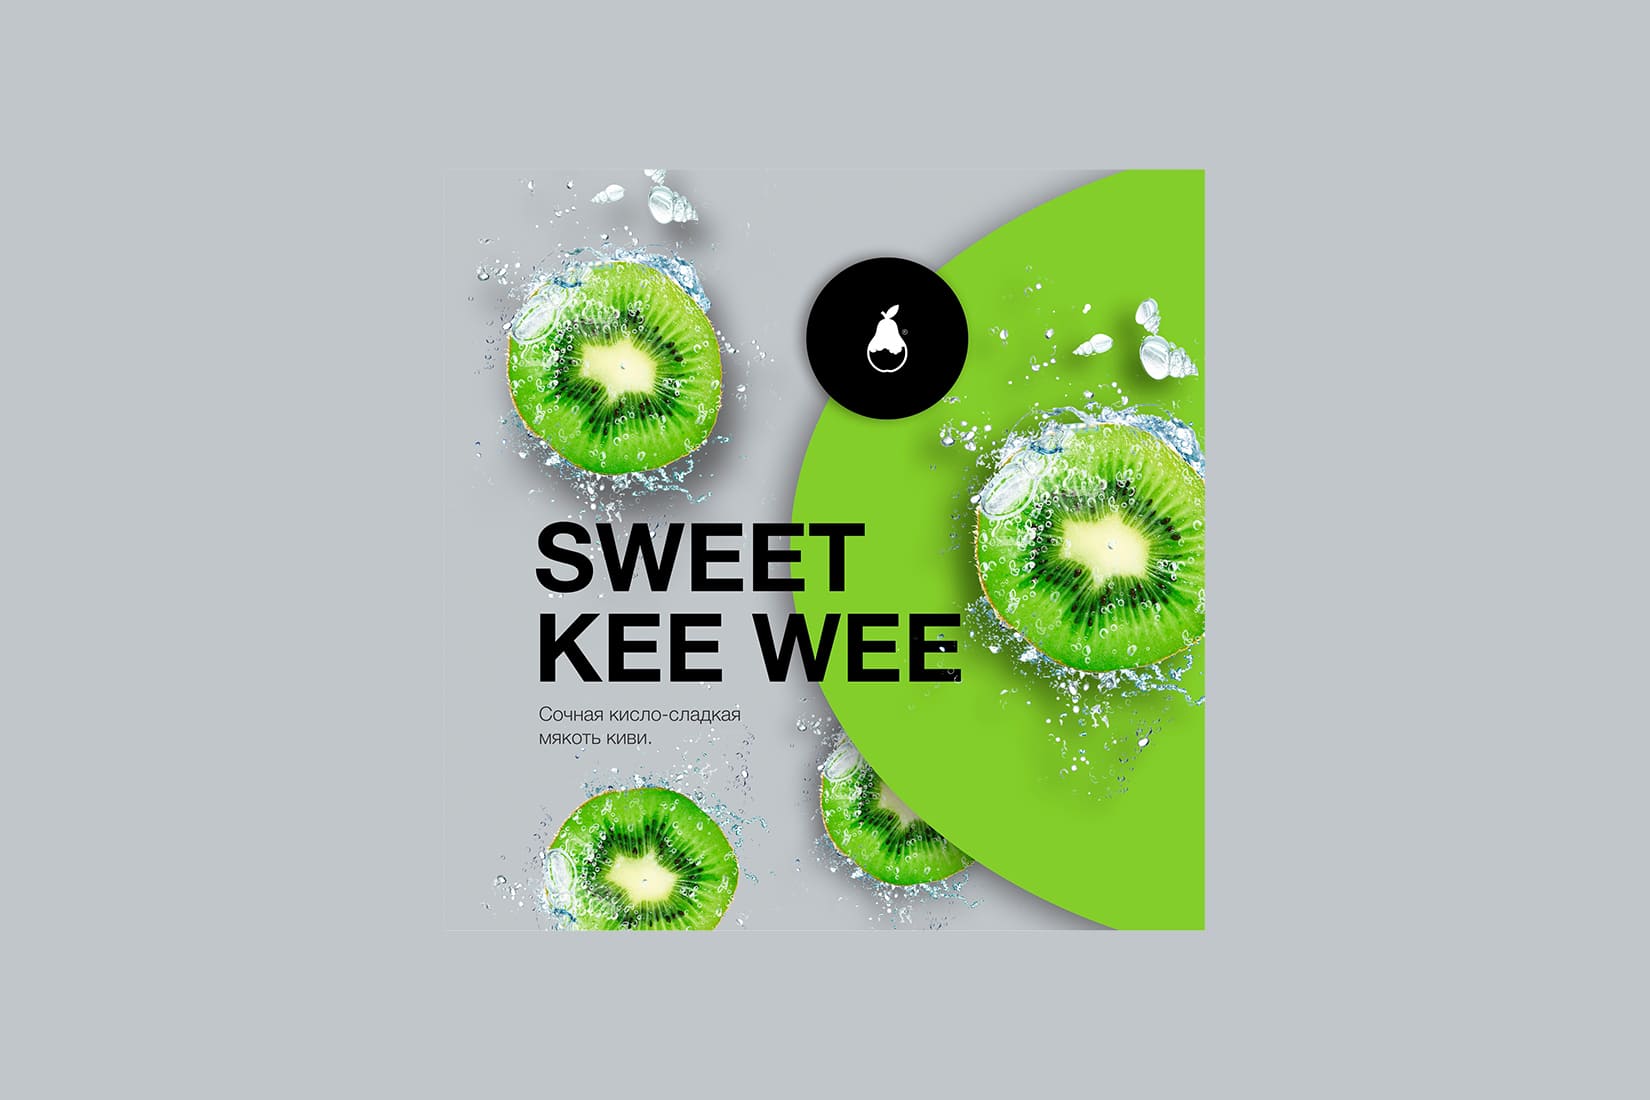 Табак для кальяна MattPear Sweet Kee Wee – описание, миксы, отзывы